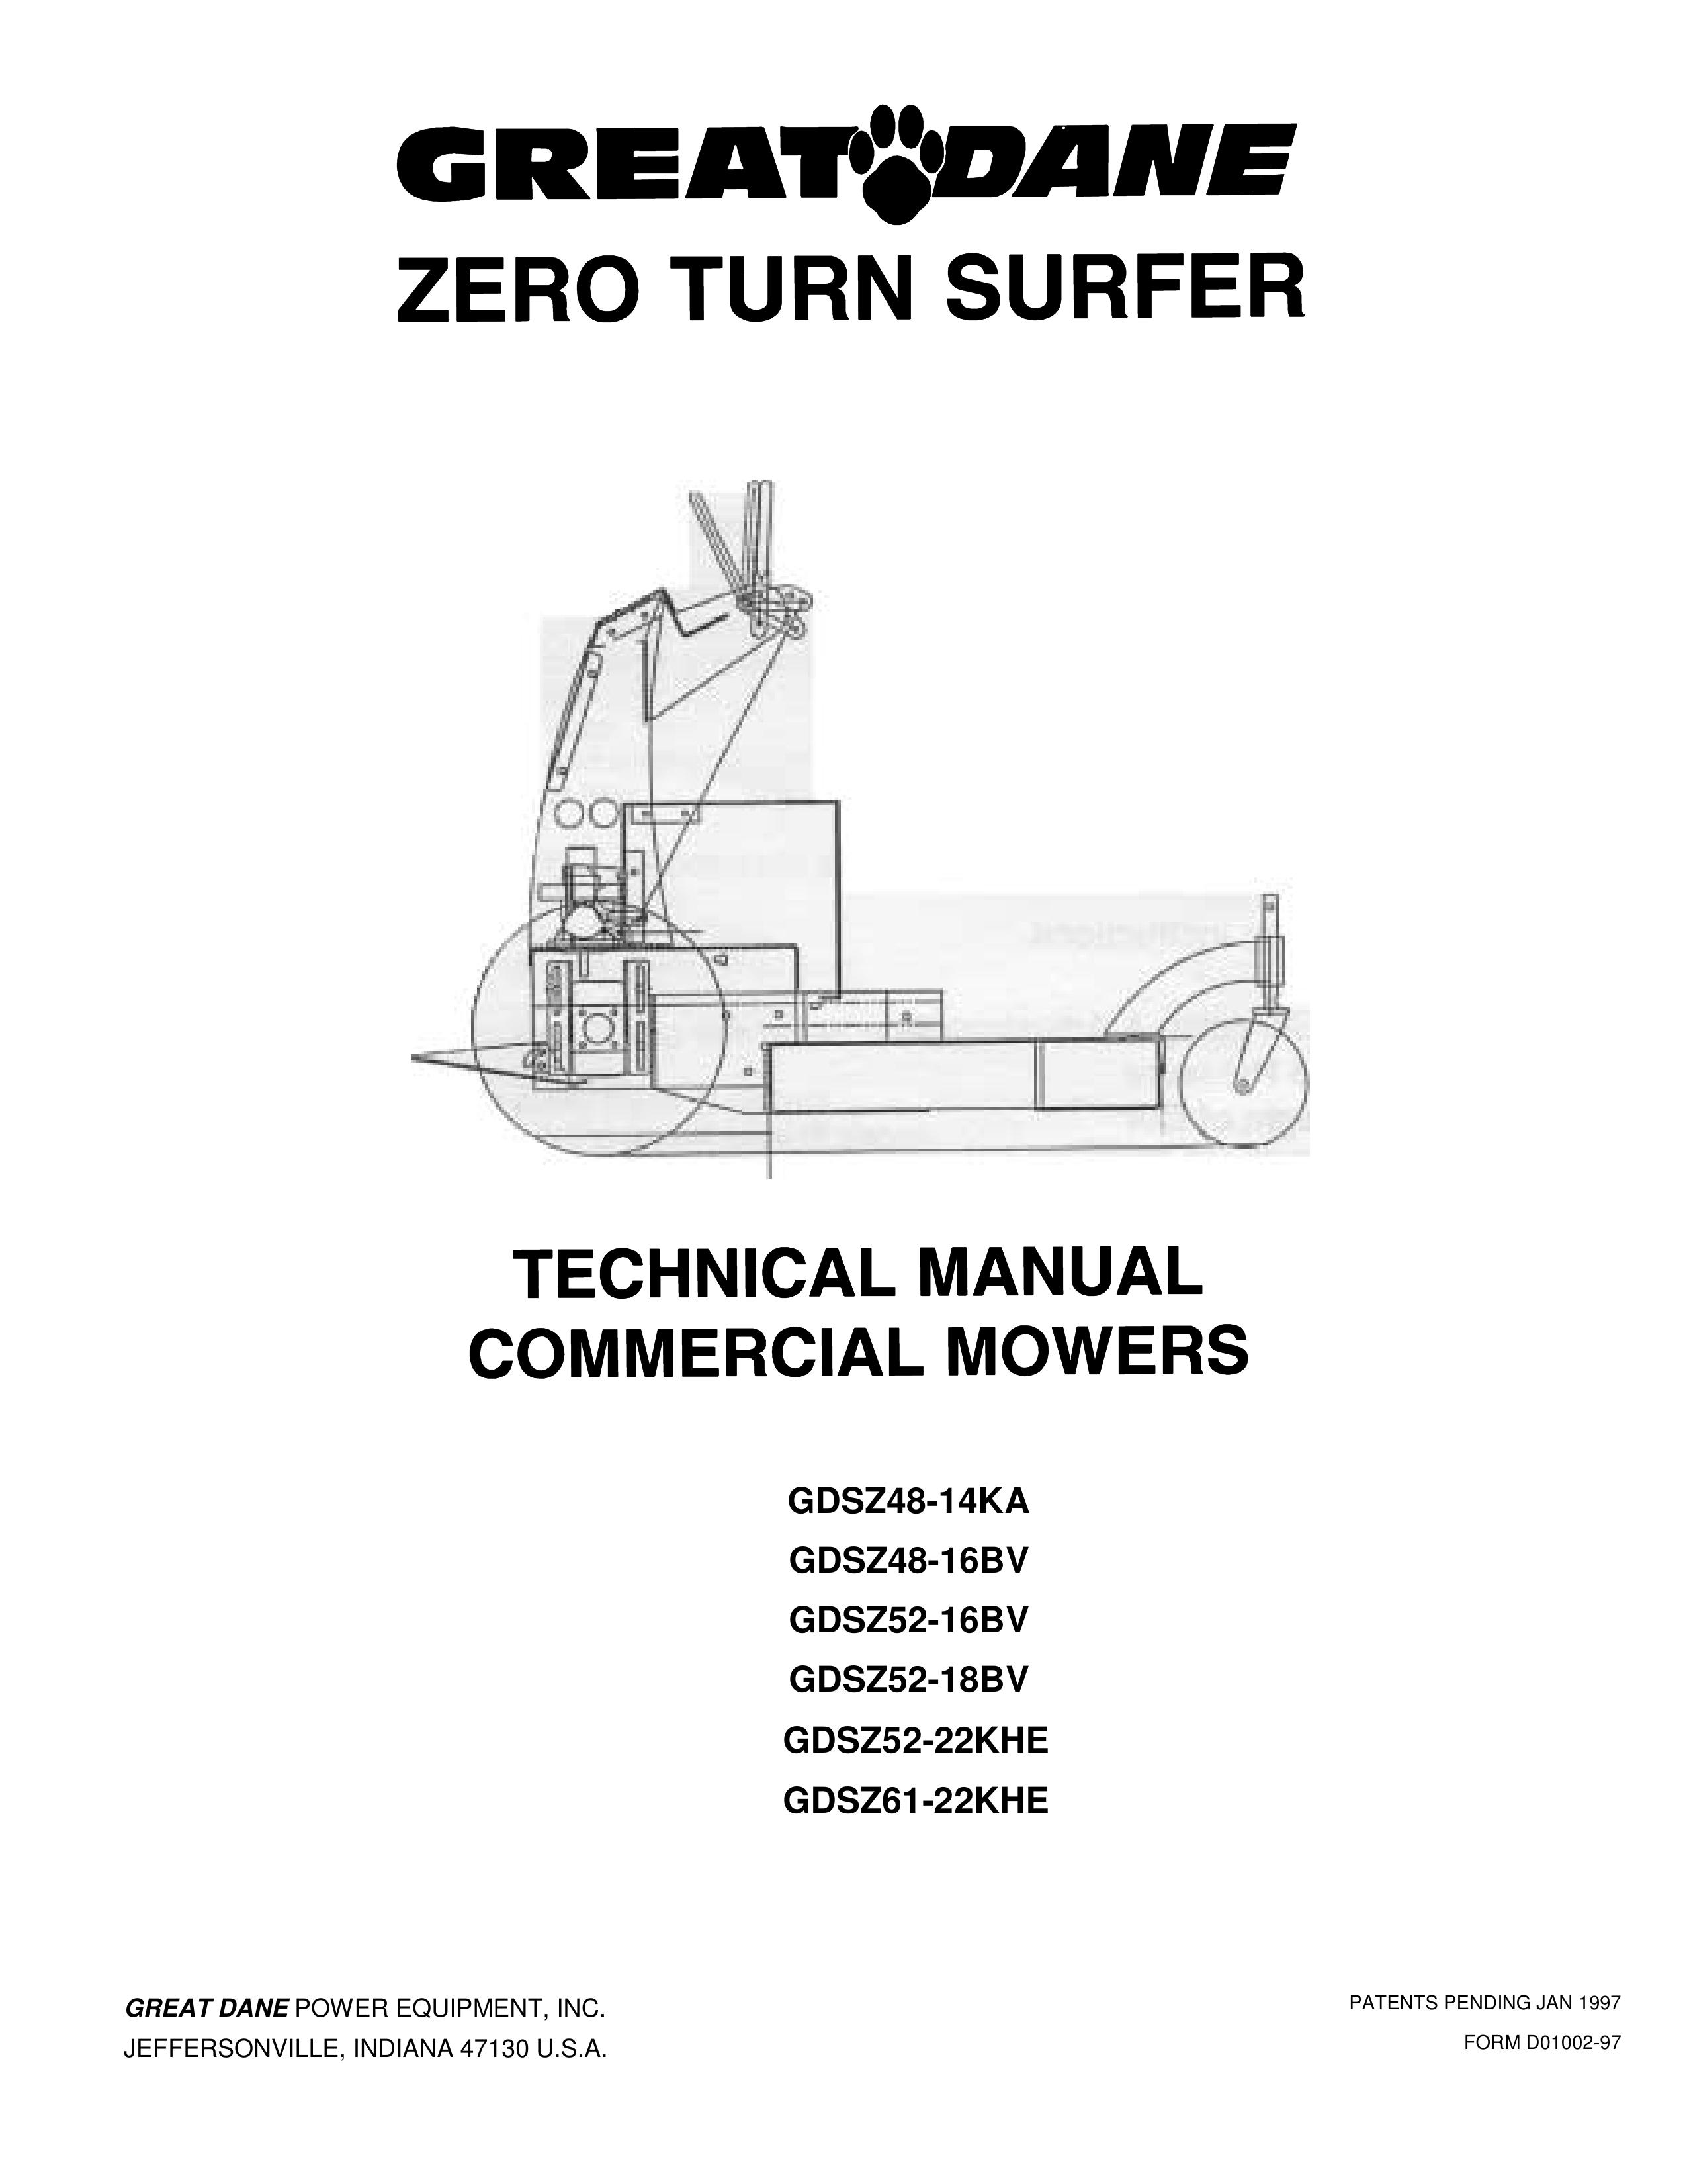 Great Dane GDSZ52-18BV Lawn Mower User Manual